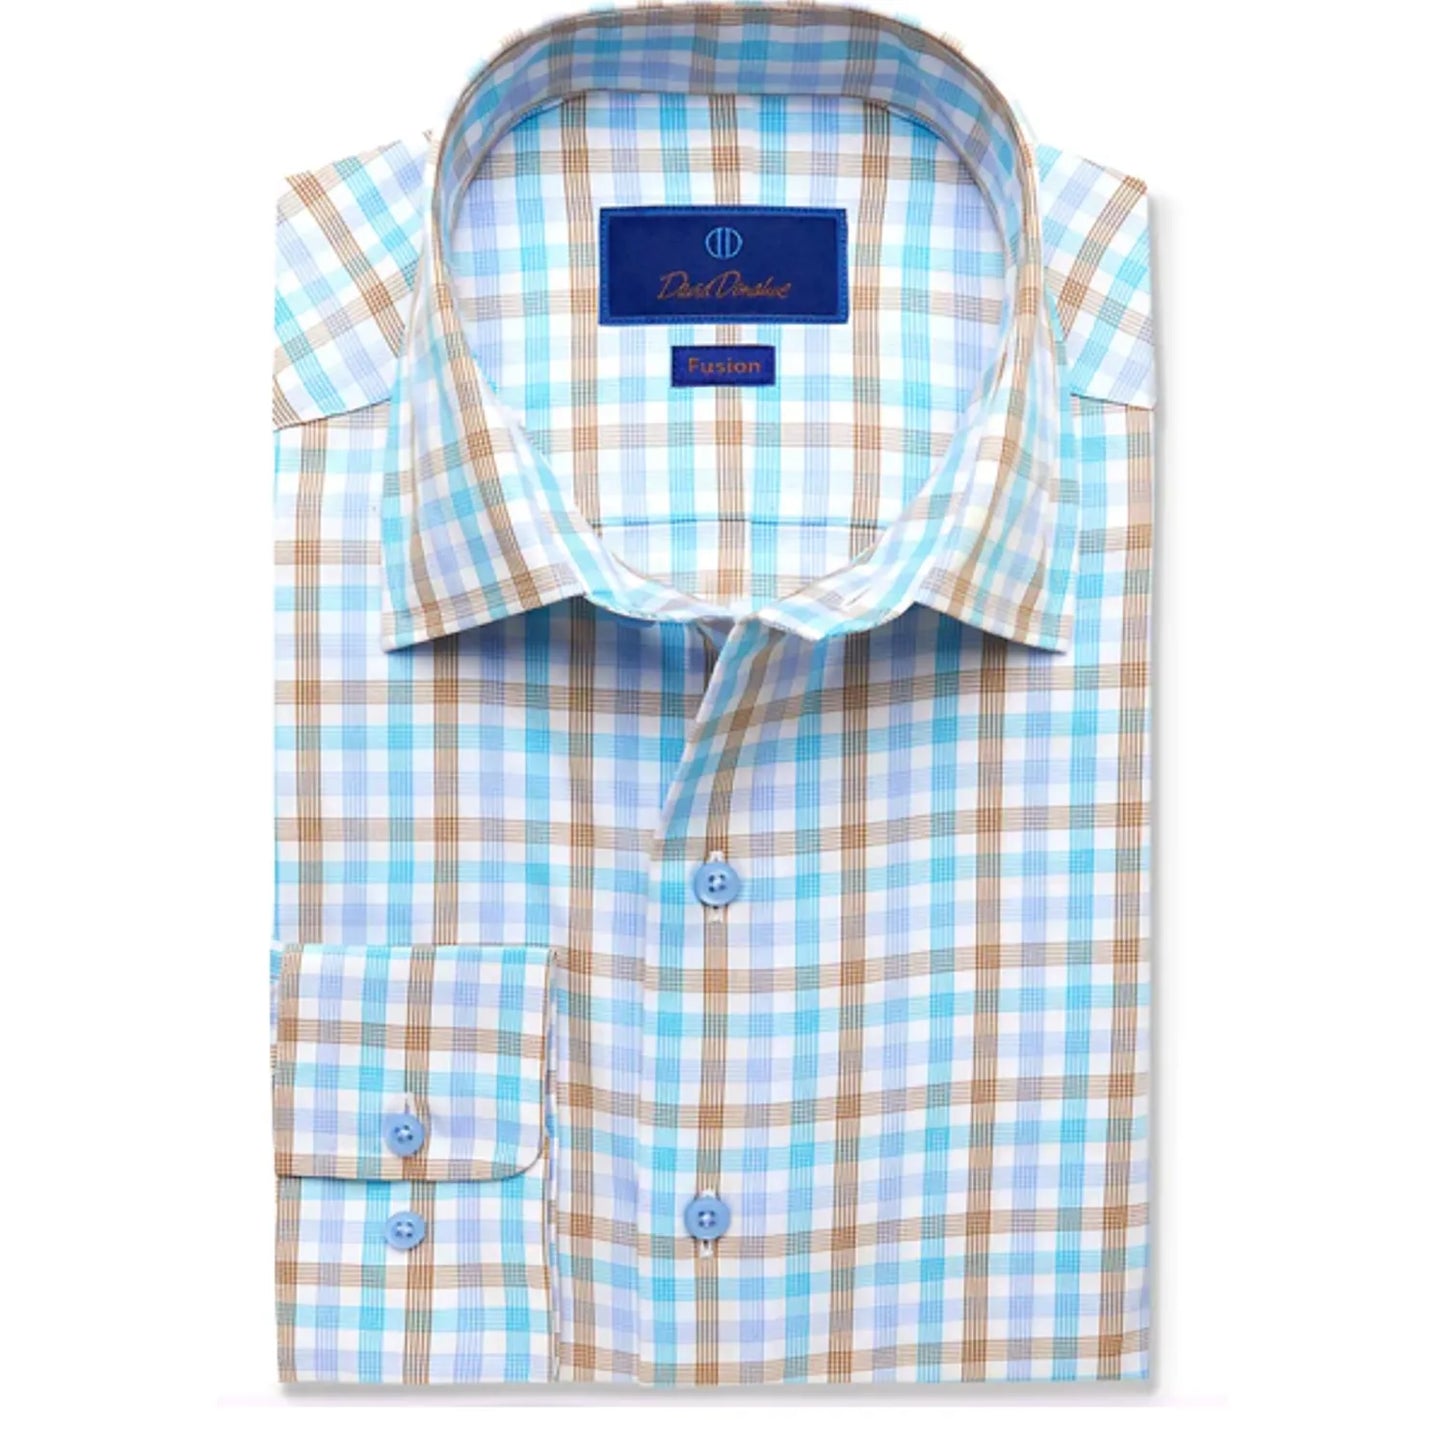 David Donahue Fusion Shirt (Blue/Tan Fine Plaid)